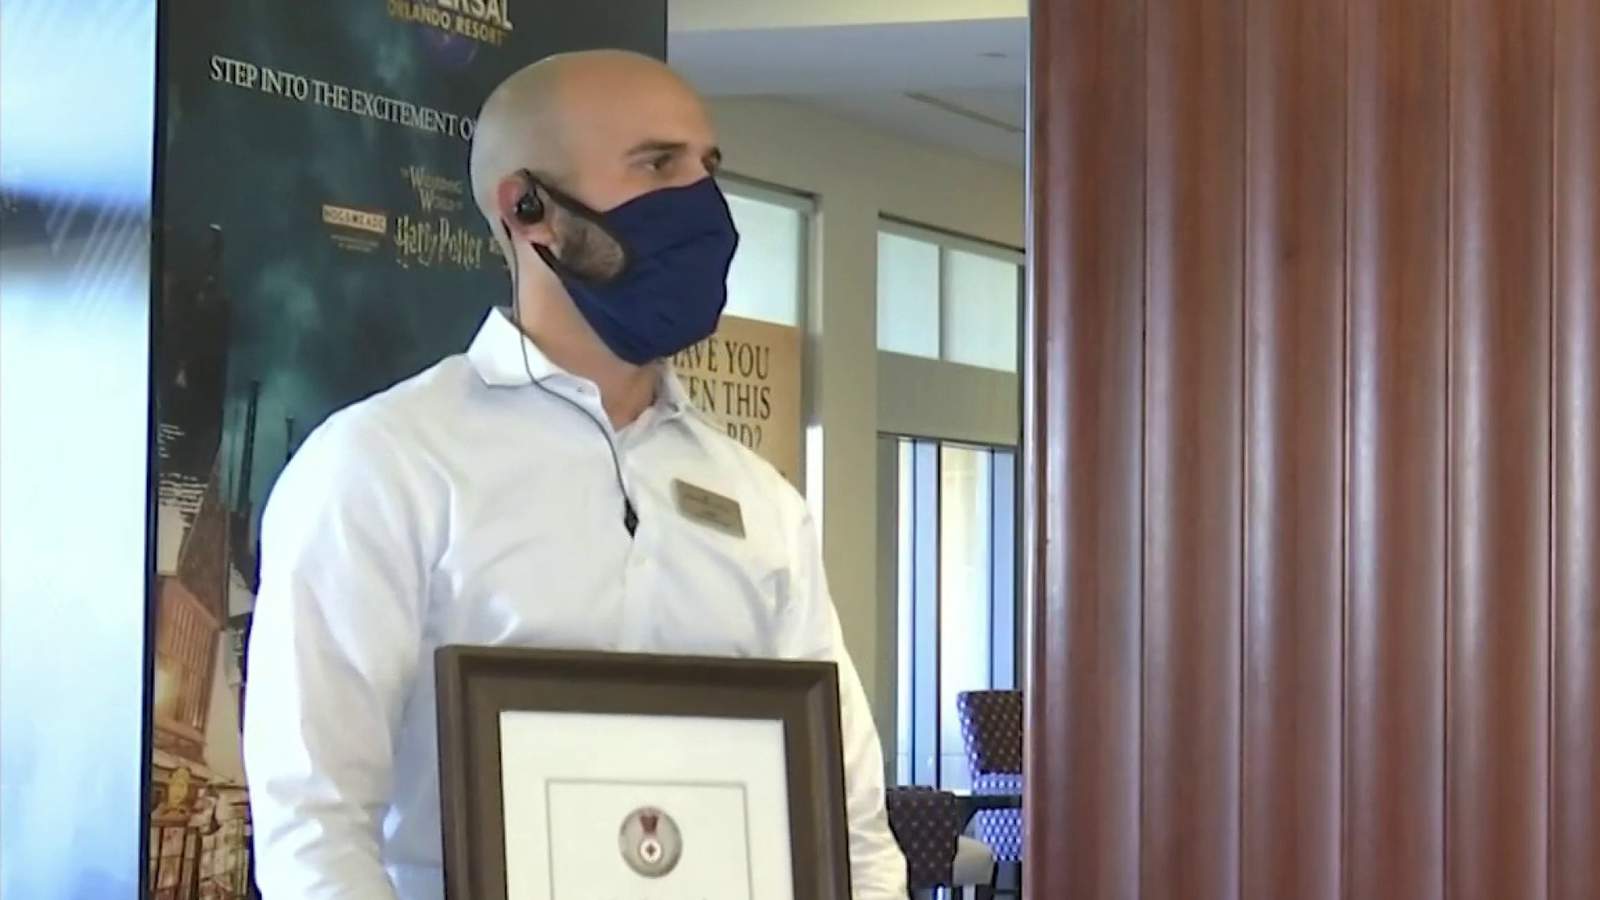 Orlando hotel worker honored for saving man’s life - WKMG News 6 & ClickOrlando